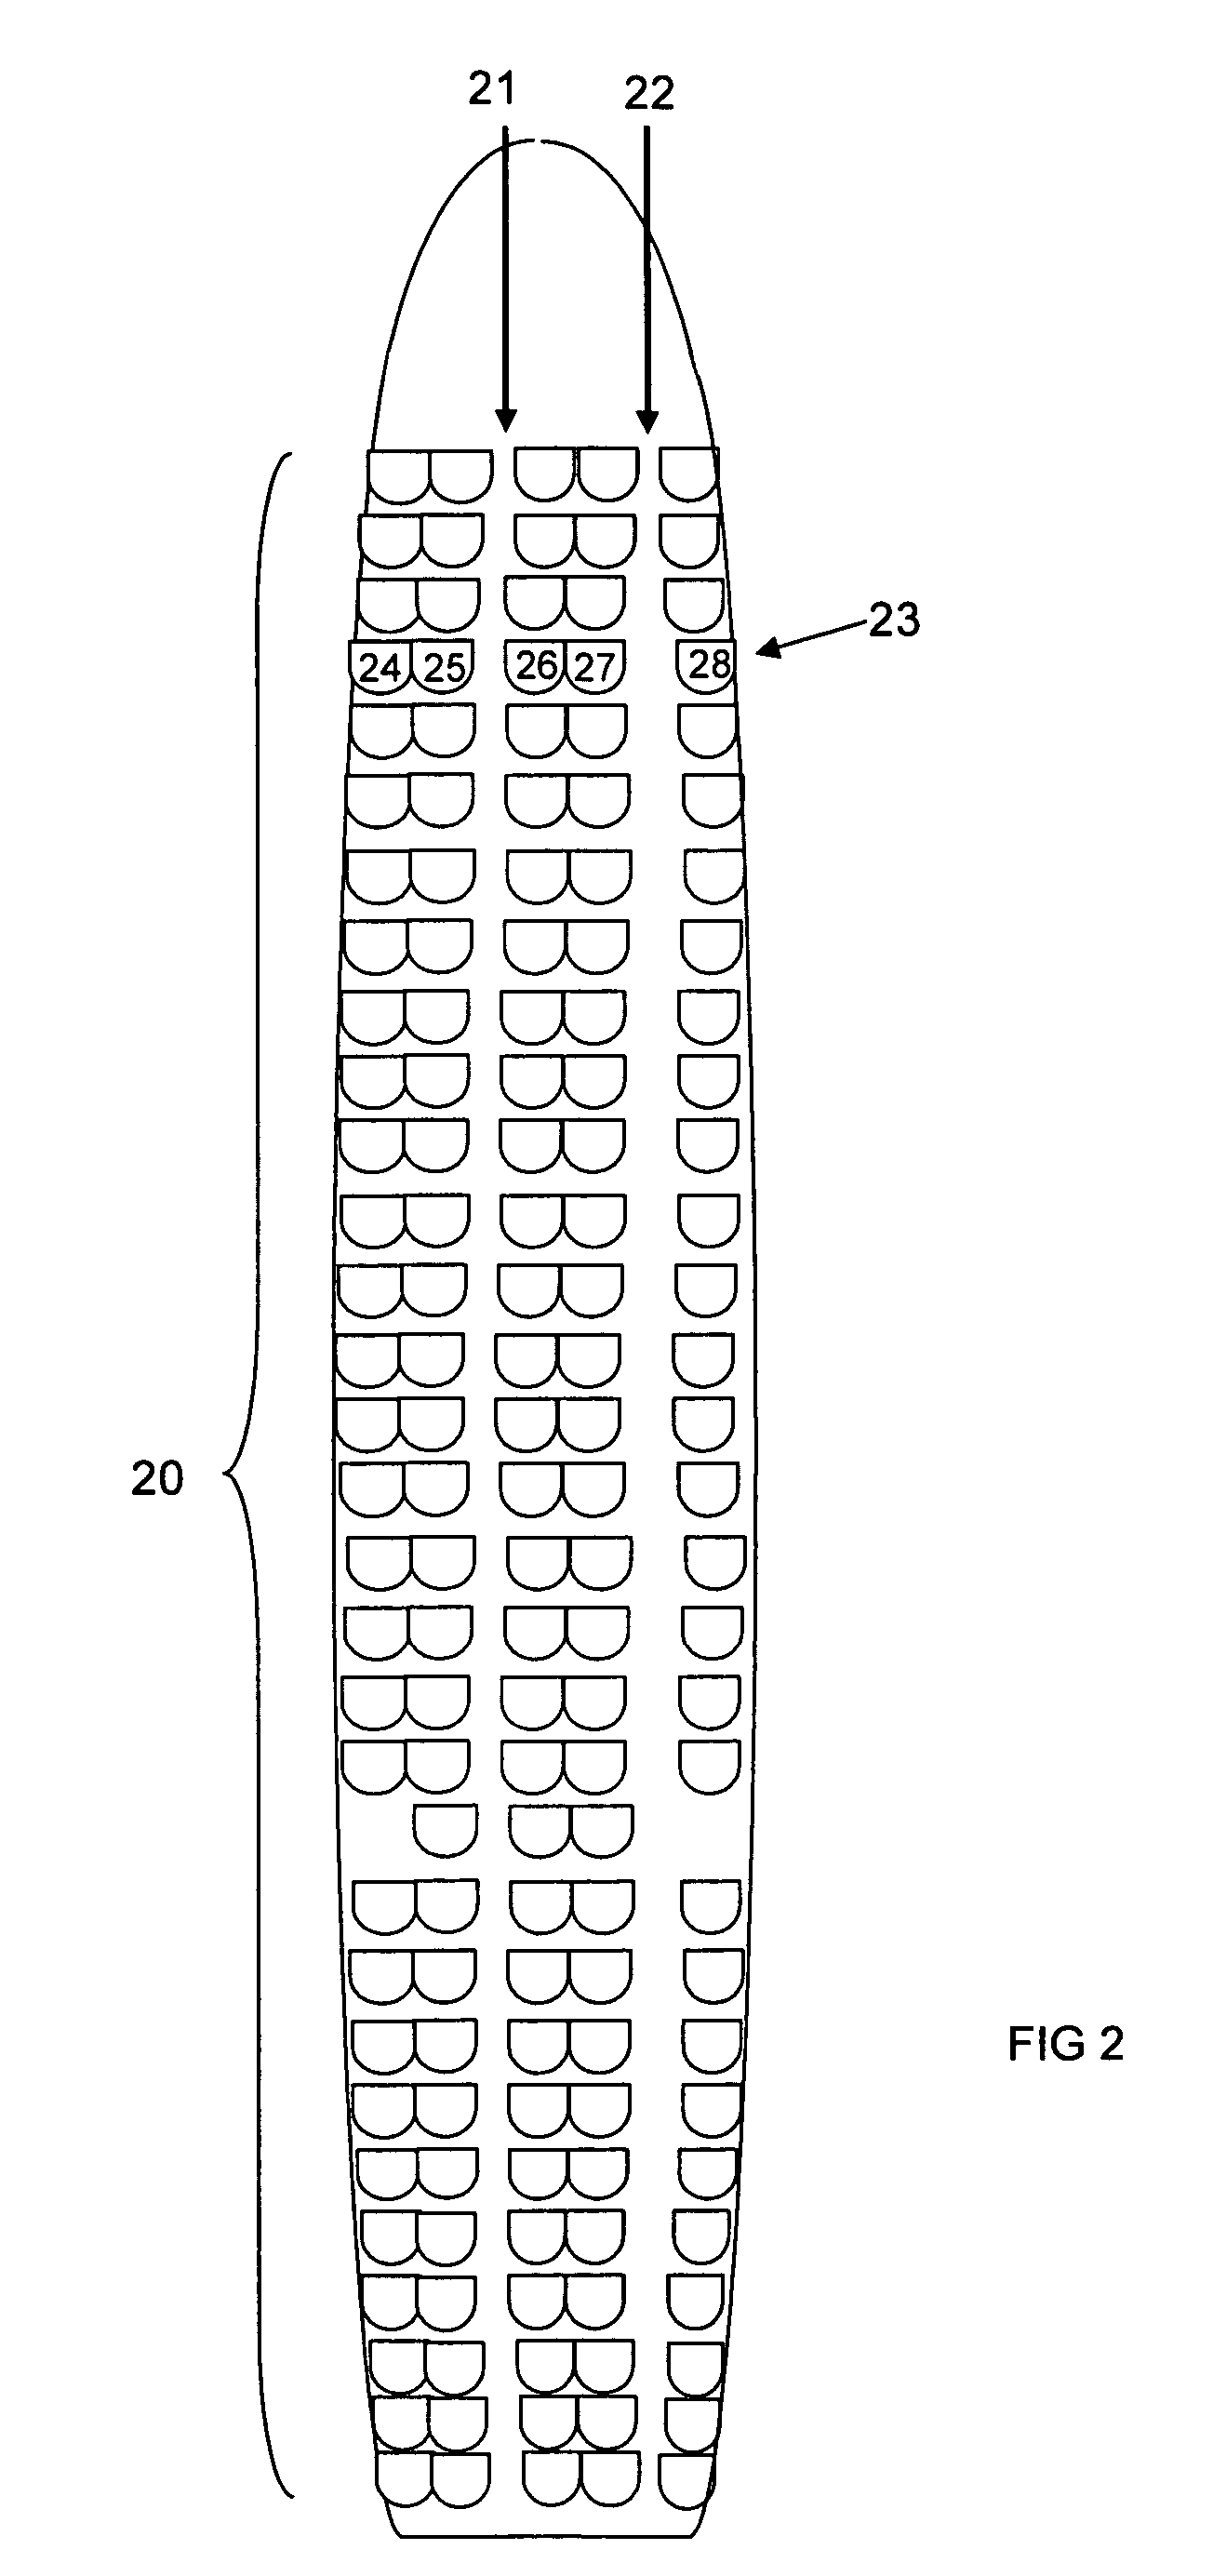 Airplane seating arrangement